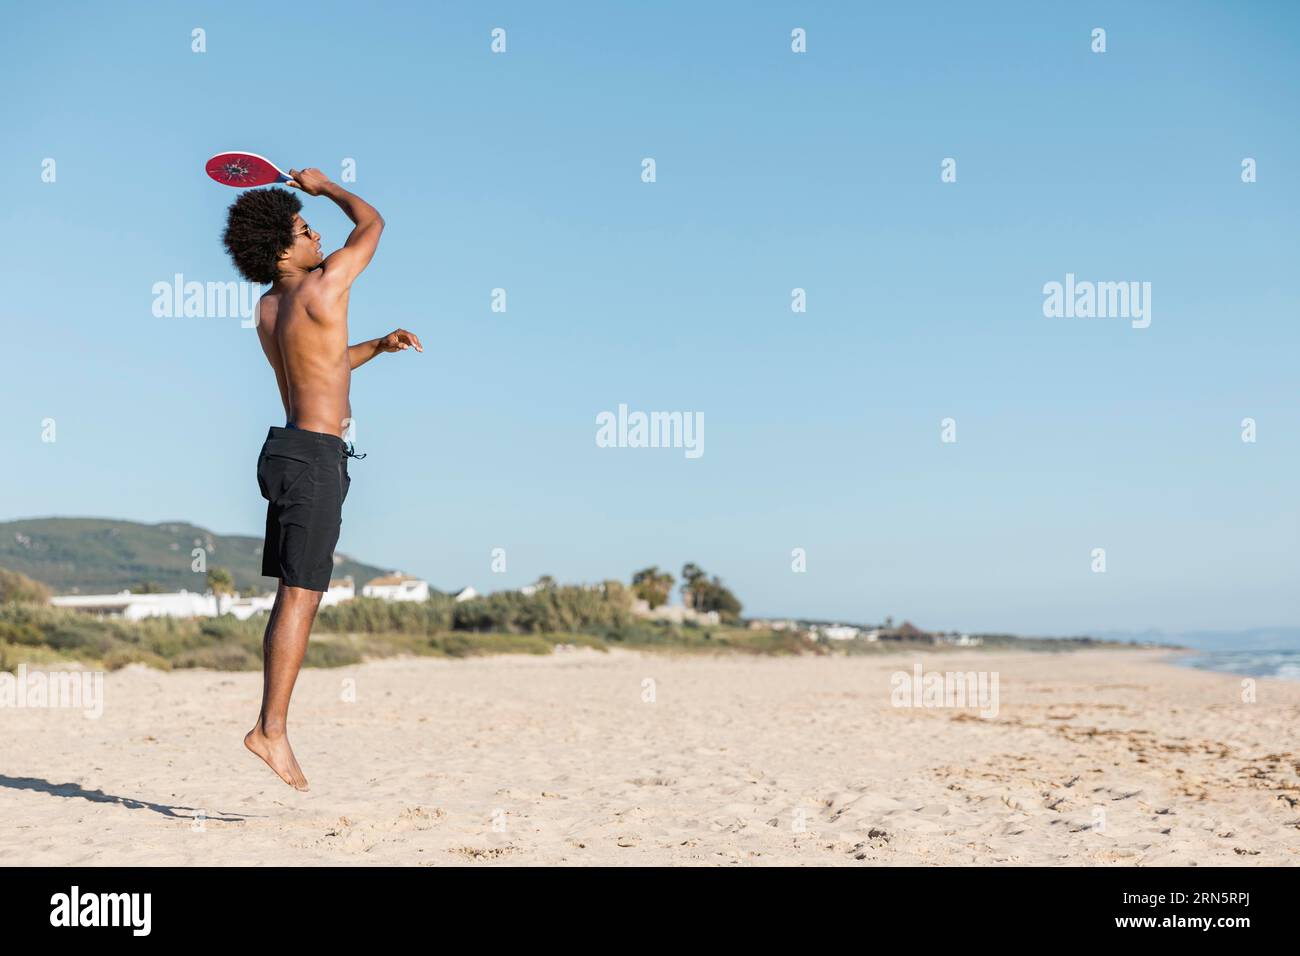 Man jumping with tennis racket beach Stock Photo